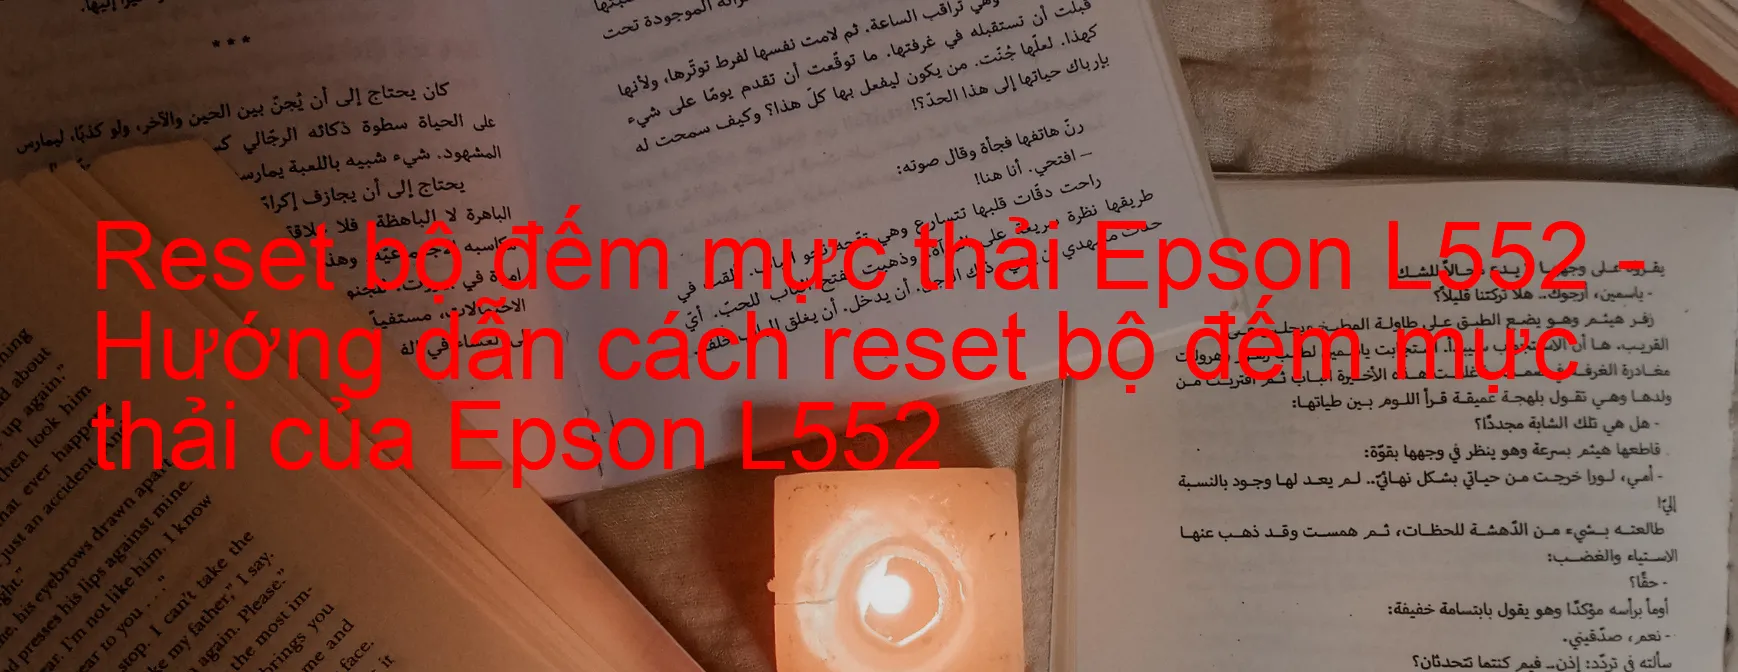 Reset bộ đếm mực thải Epson L552 - Hướng dẫn cách reset bộ đếm mực thải của Epson L552